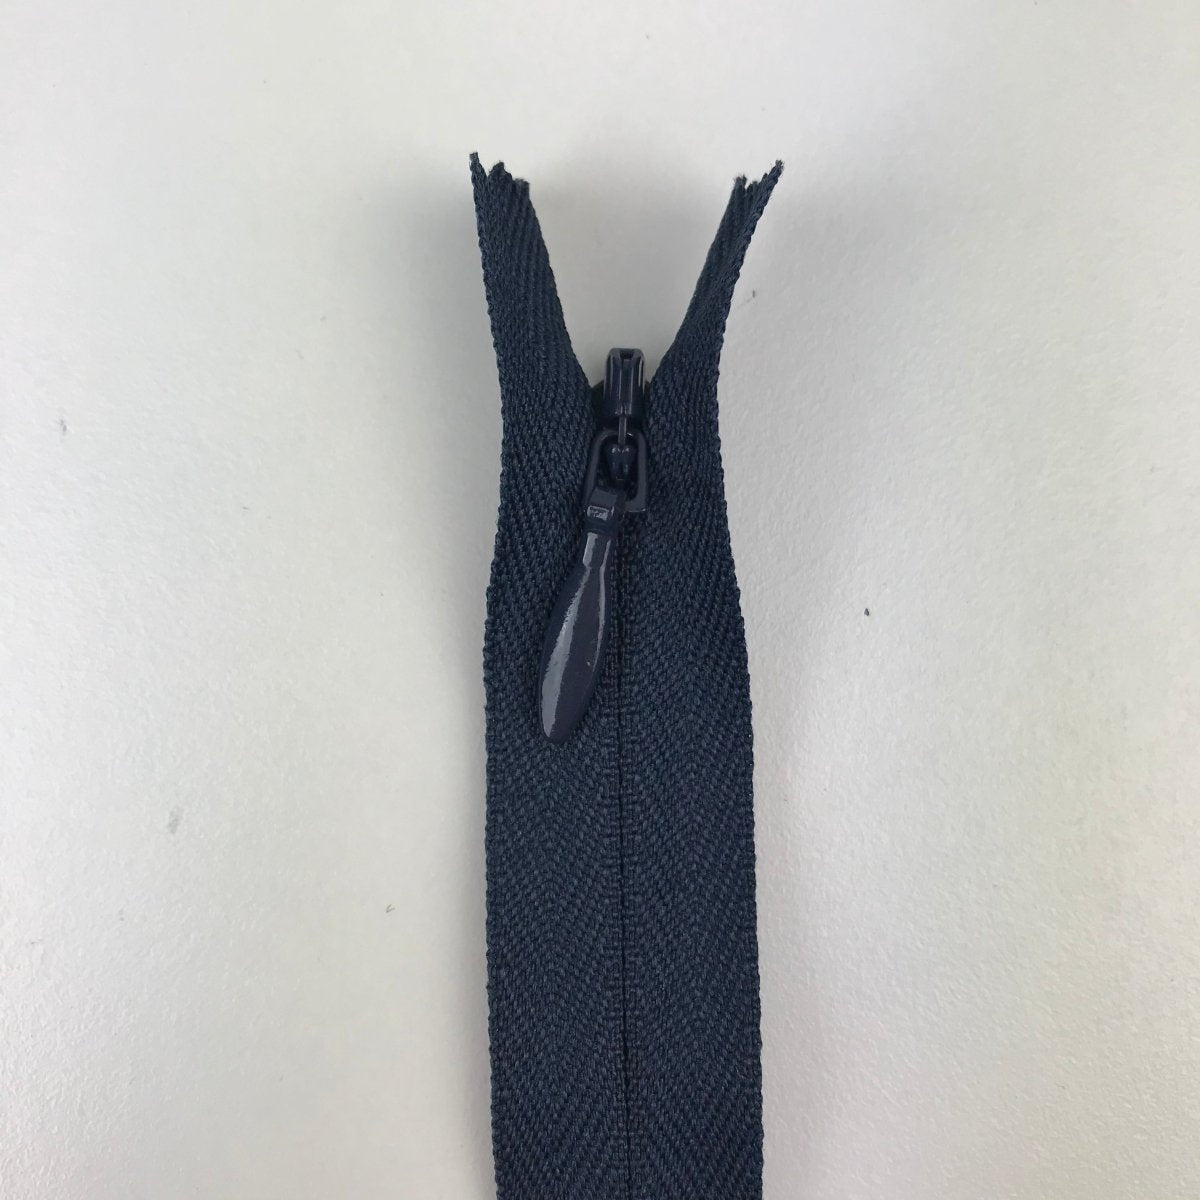 YKK Zipper - Invisible - 51cm (20") - Sewing Gem